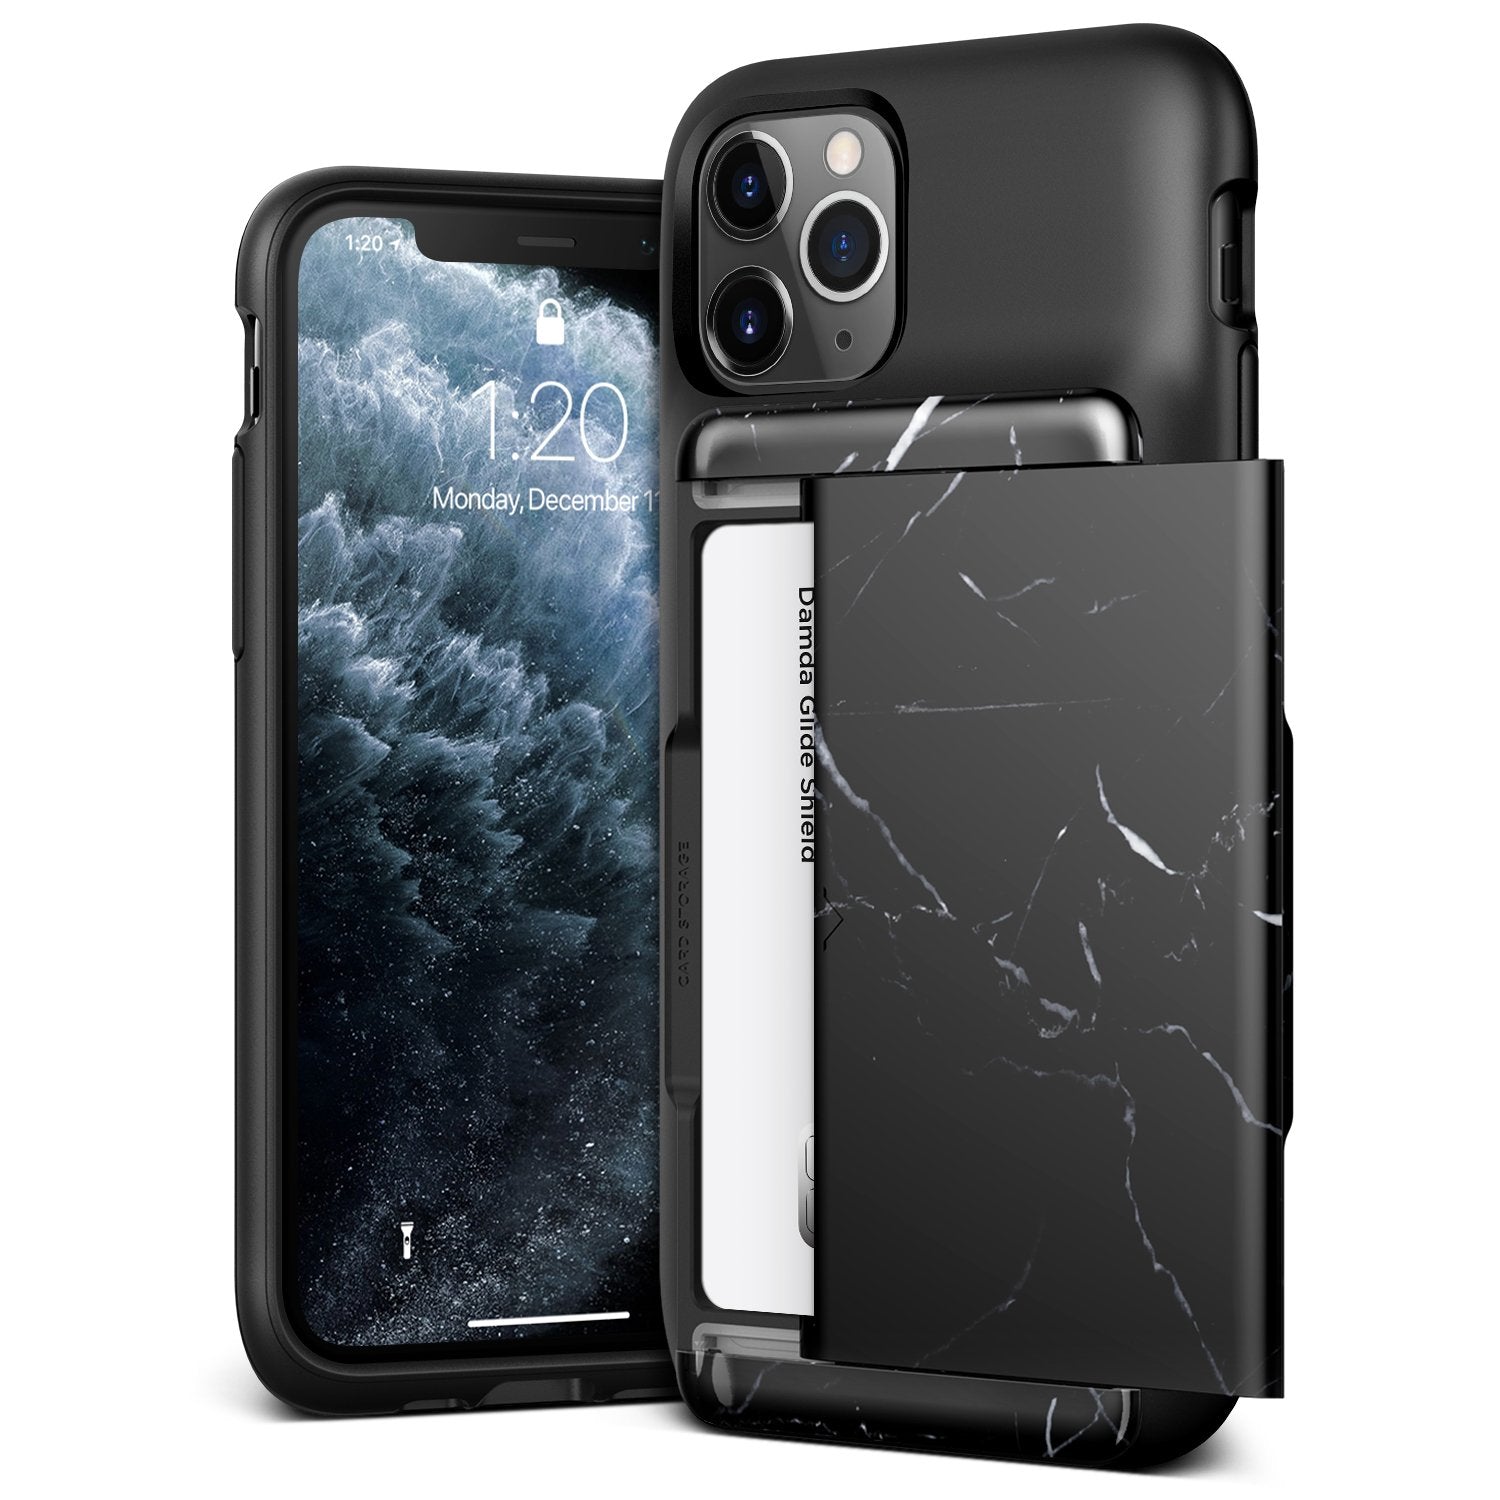 iPhone 11 Pro Case Damda Glide Shield